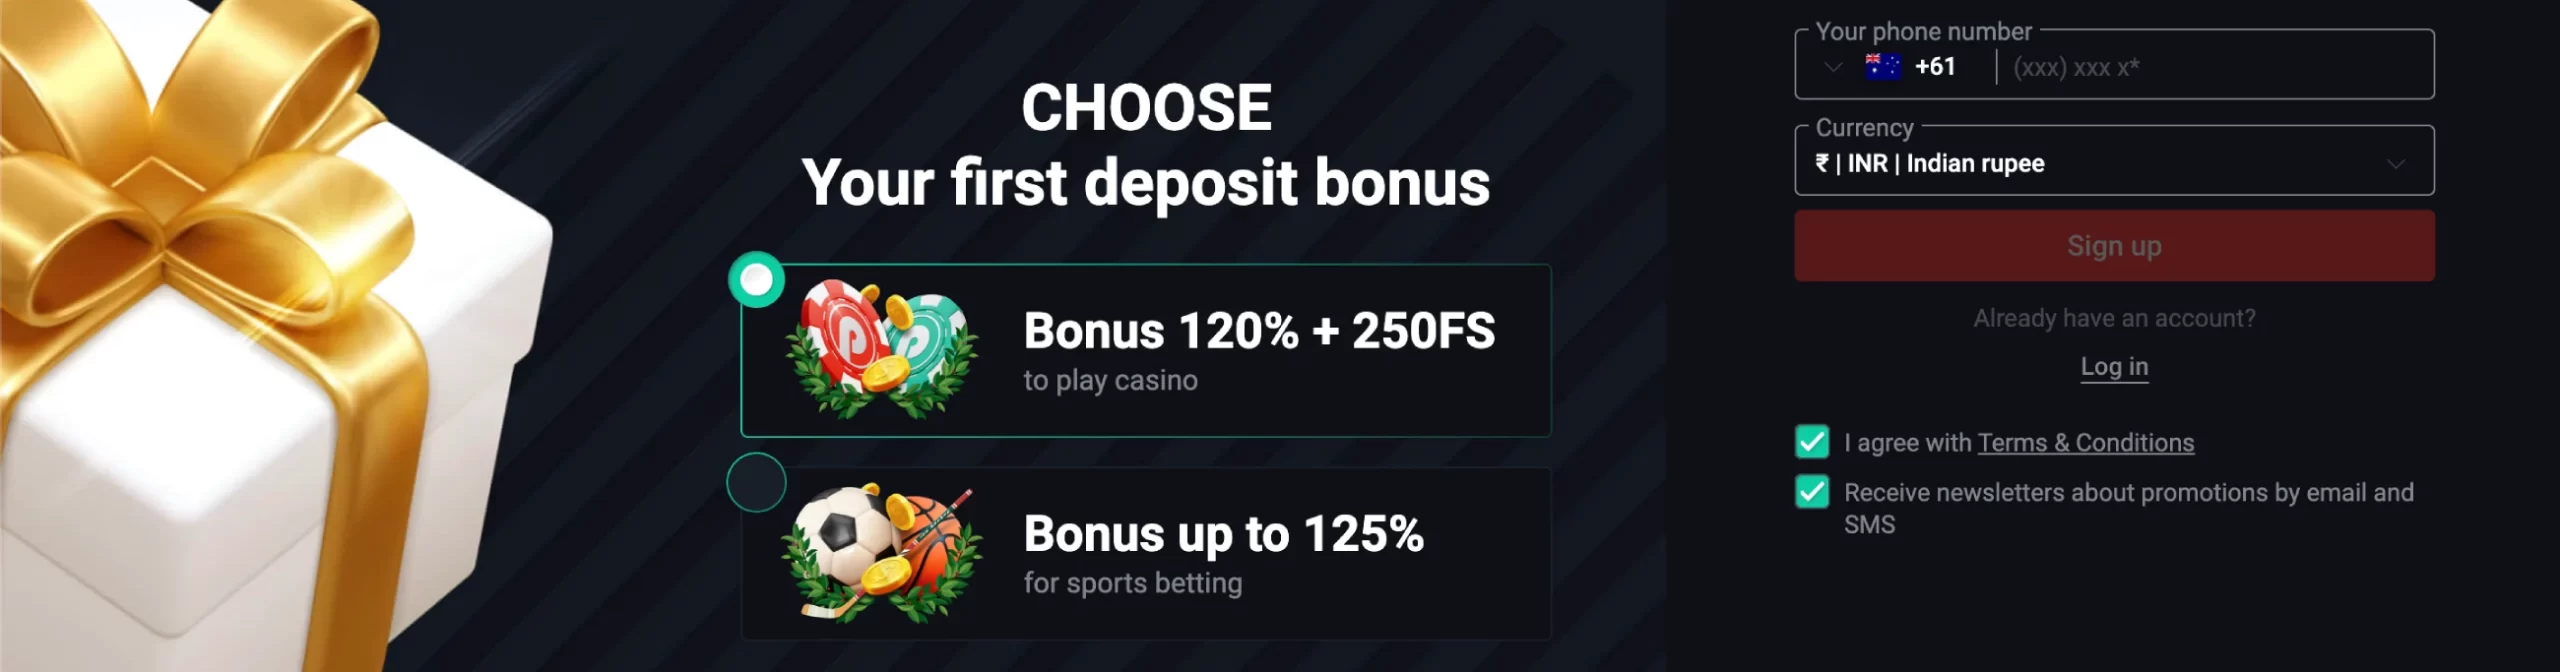 Pin-Up 120% Welcome Bonus